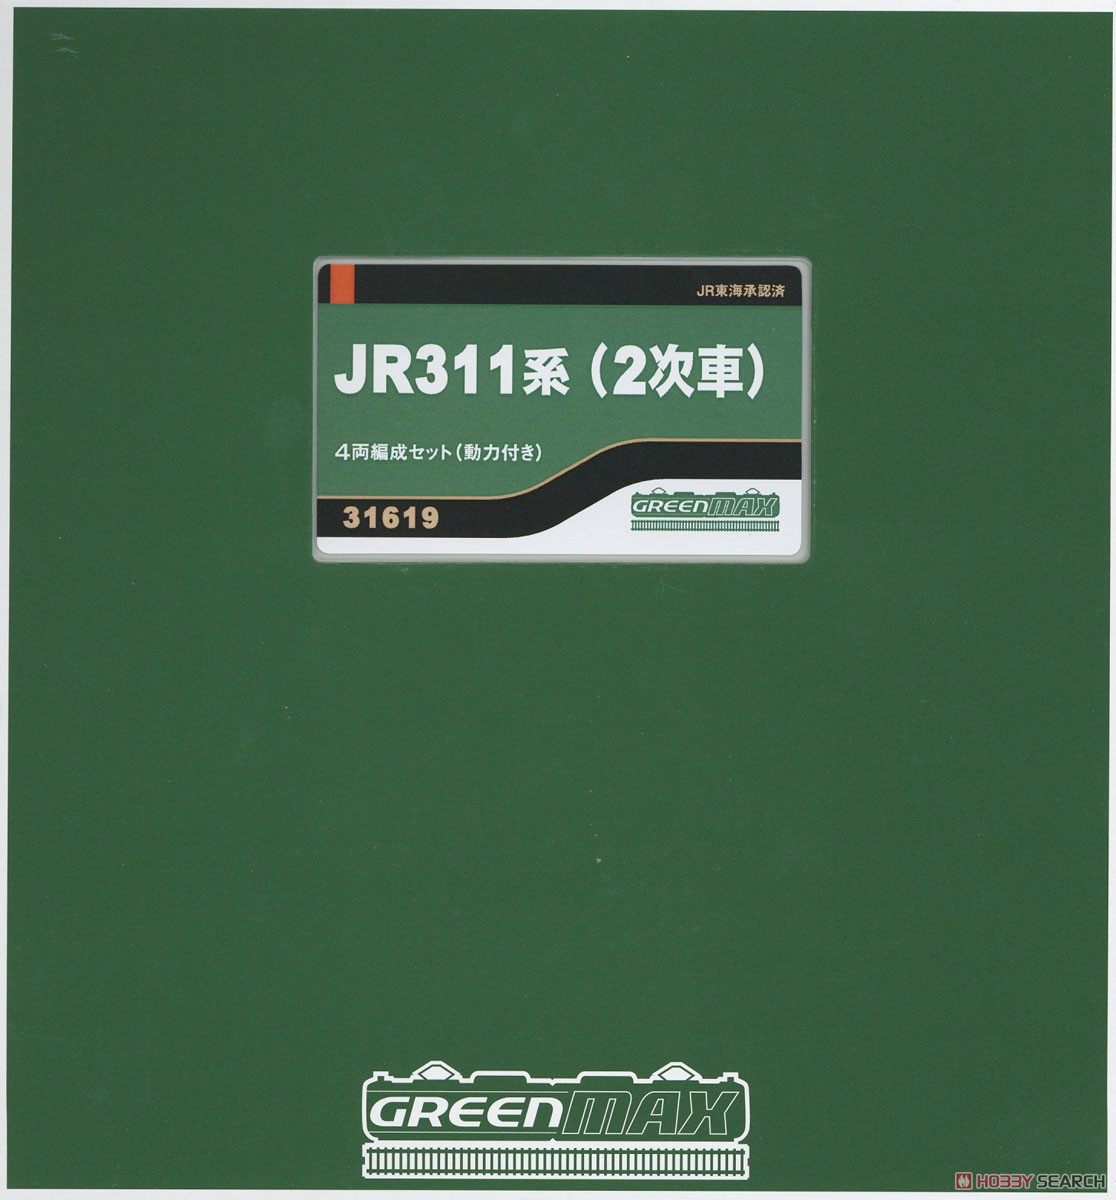 JR 311系 (2次車) 4両編成セット (動力付き) (4両セット) (塗装済み完成品) (鉄道模型) パッケージ1